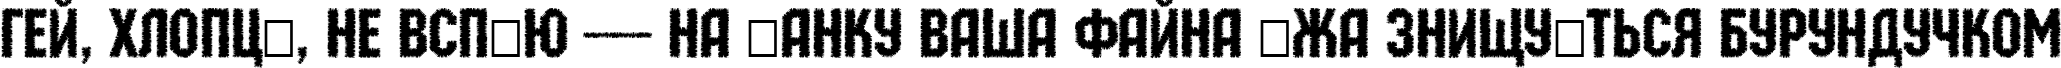 Пример написания шрифтом a_MachinaOrtoPrk текста на украинском